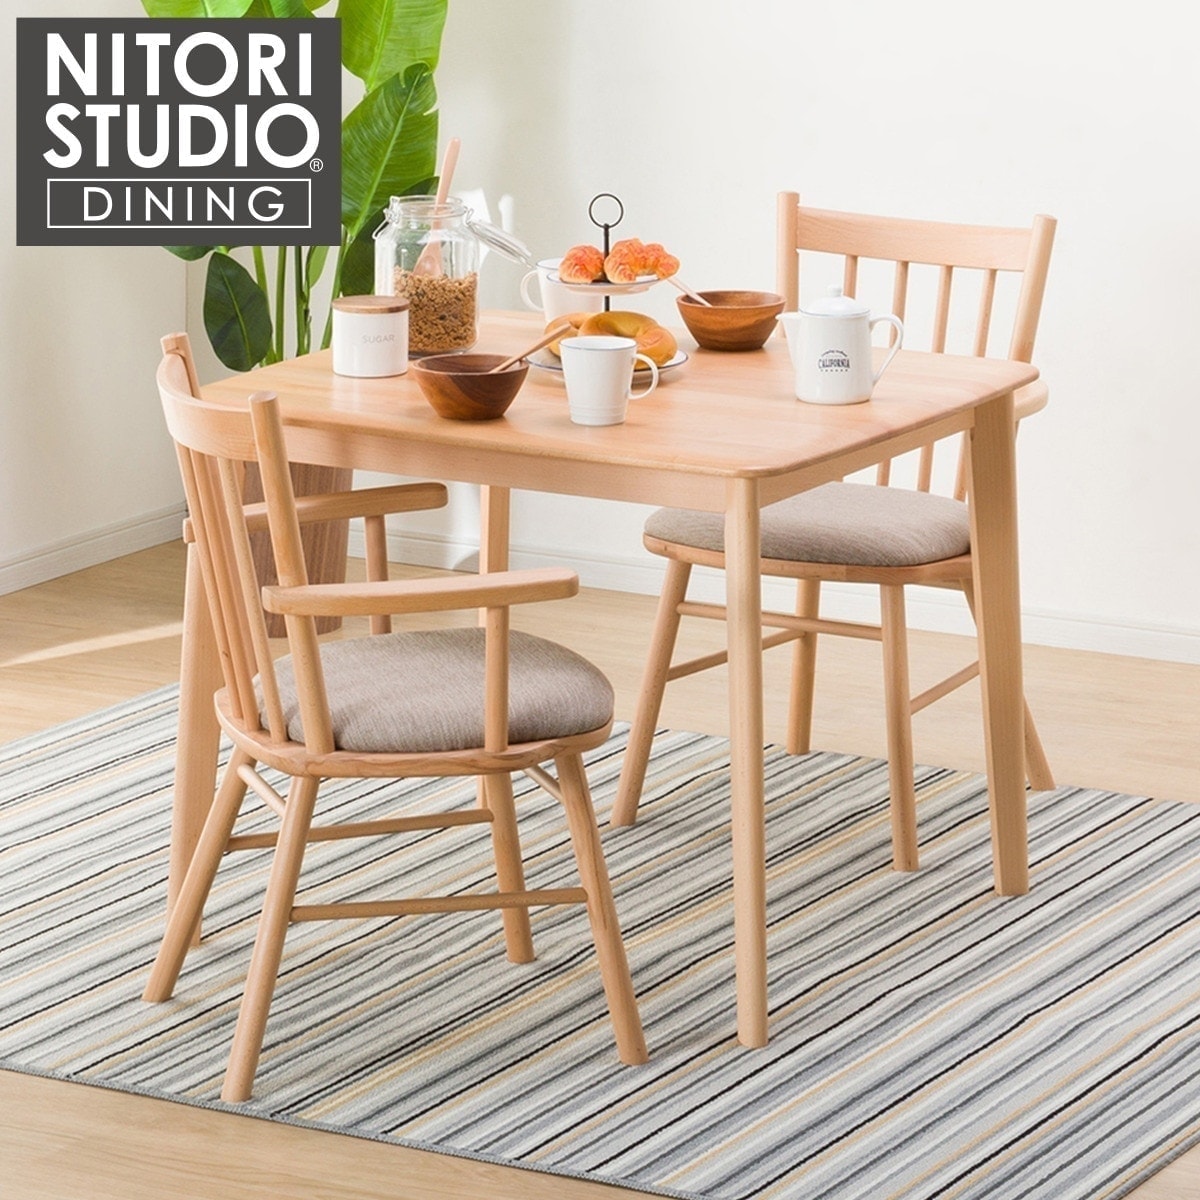 NITORI ニトリ ダイニングセット 食卓テーブル 椅子 ナッツ NUTS - 机 